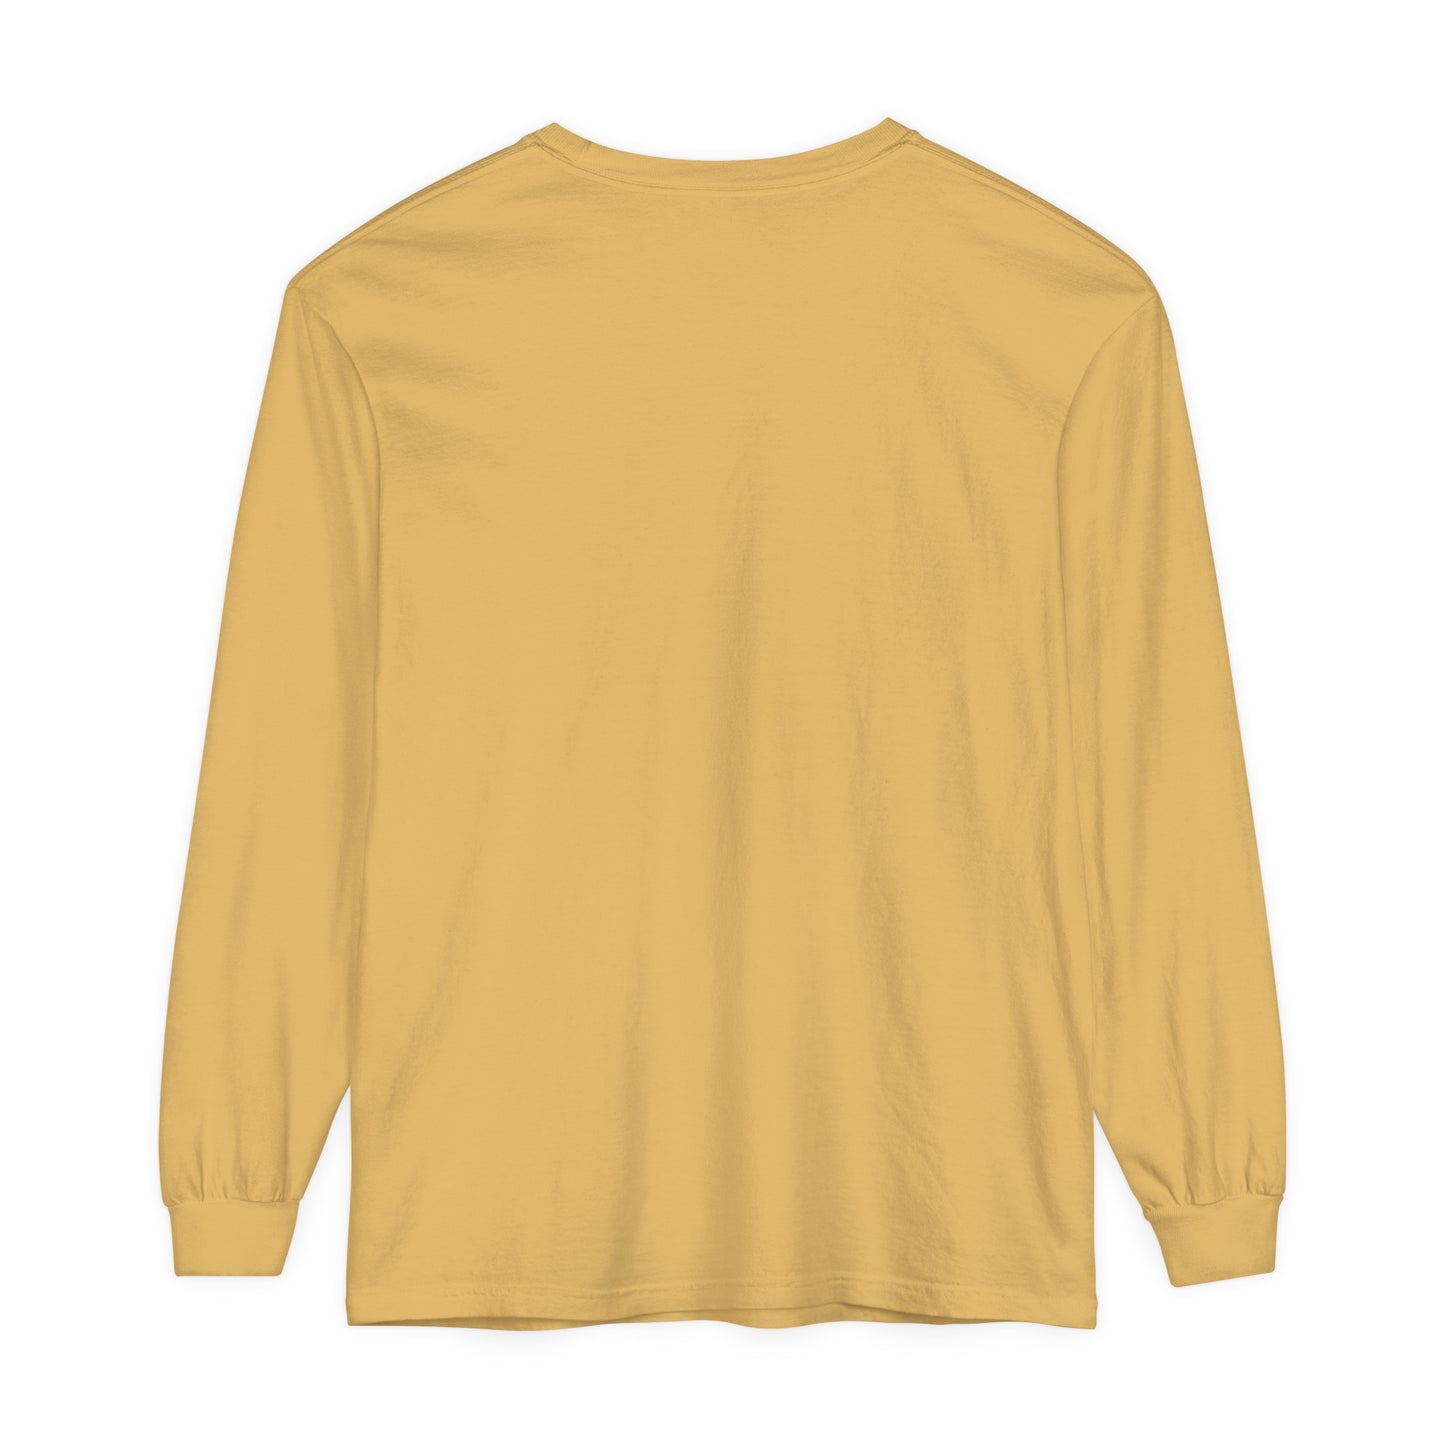 365 Sports Unisex Garment-dyed Long Sleeve T-Shirt